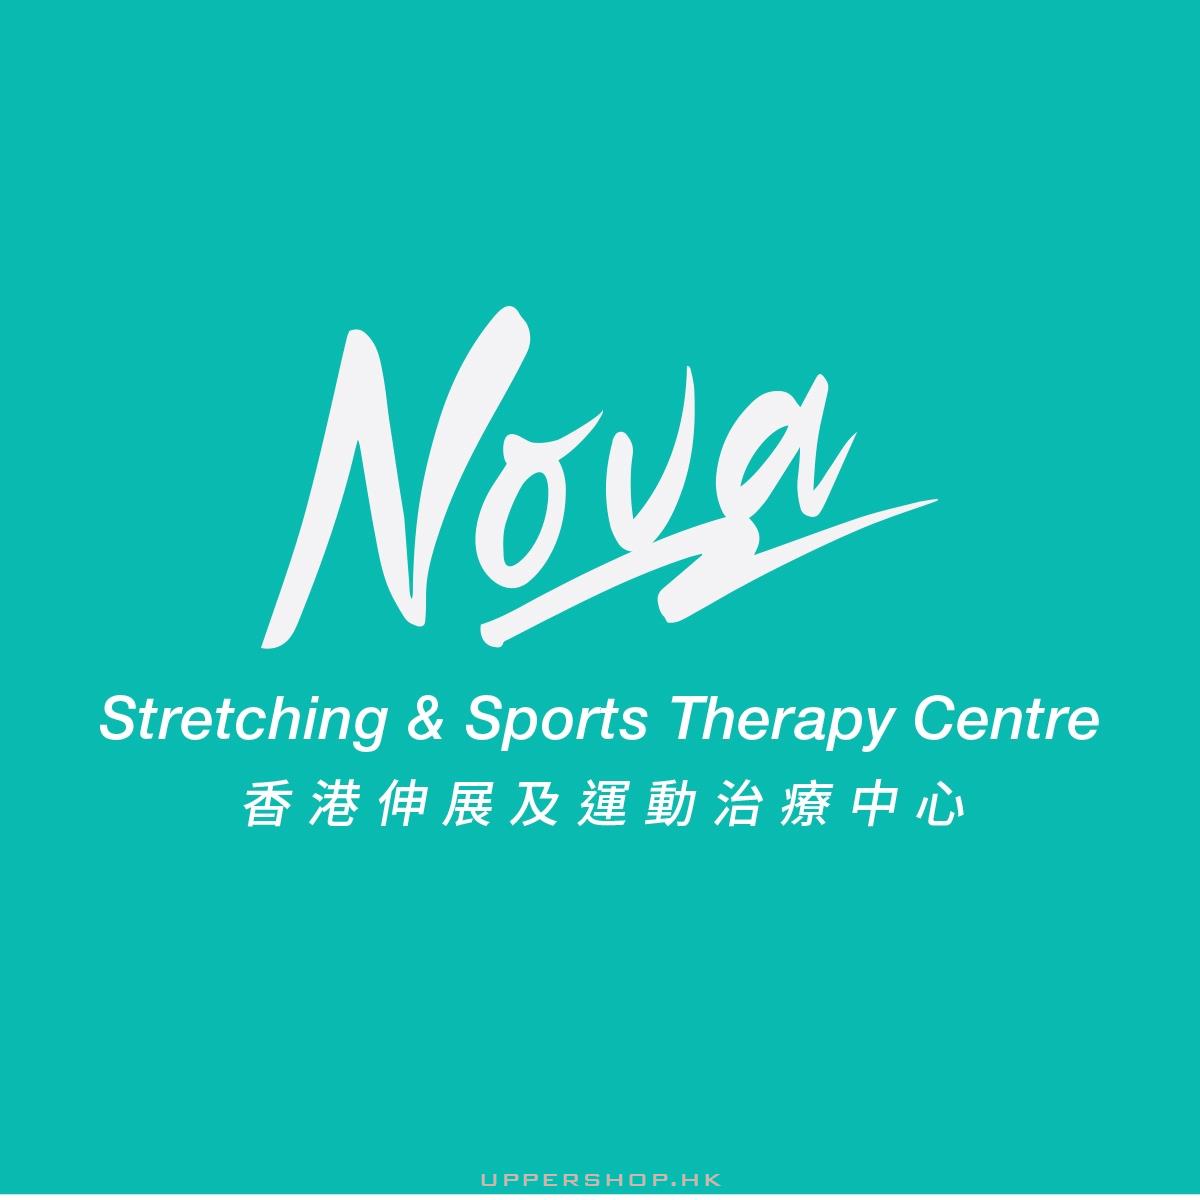 Nova Stretching & Sports Therapy Centre